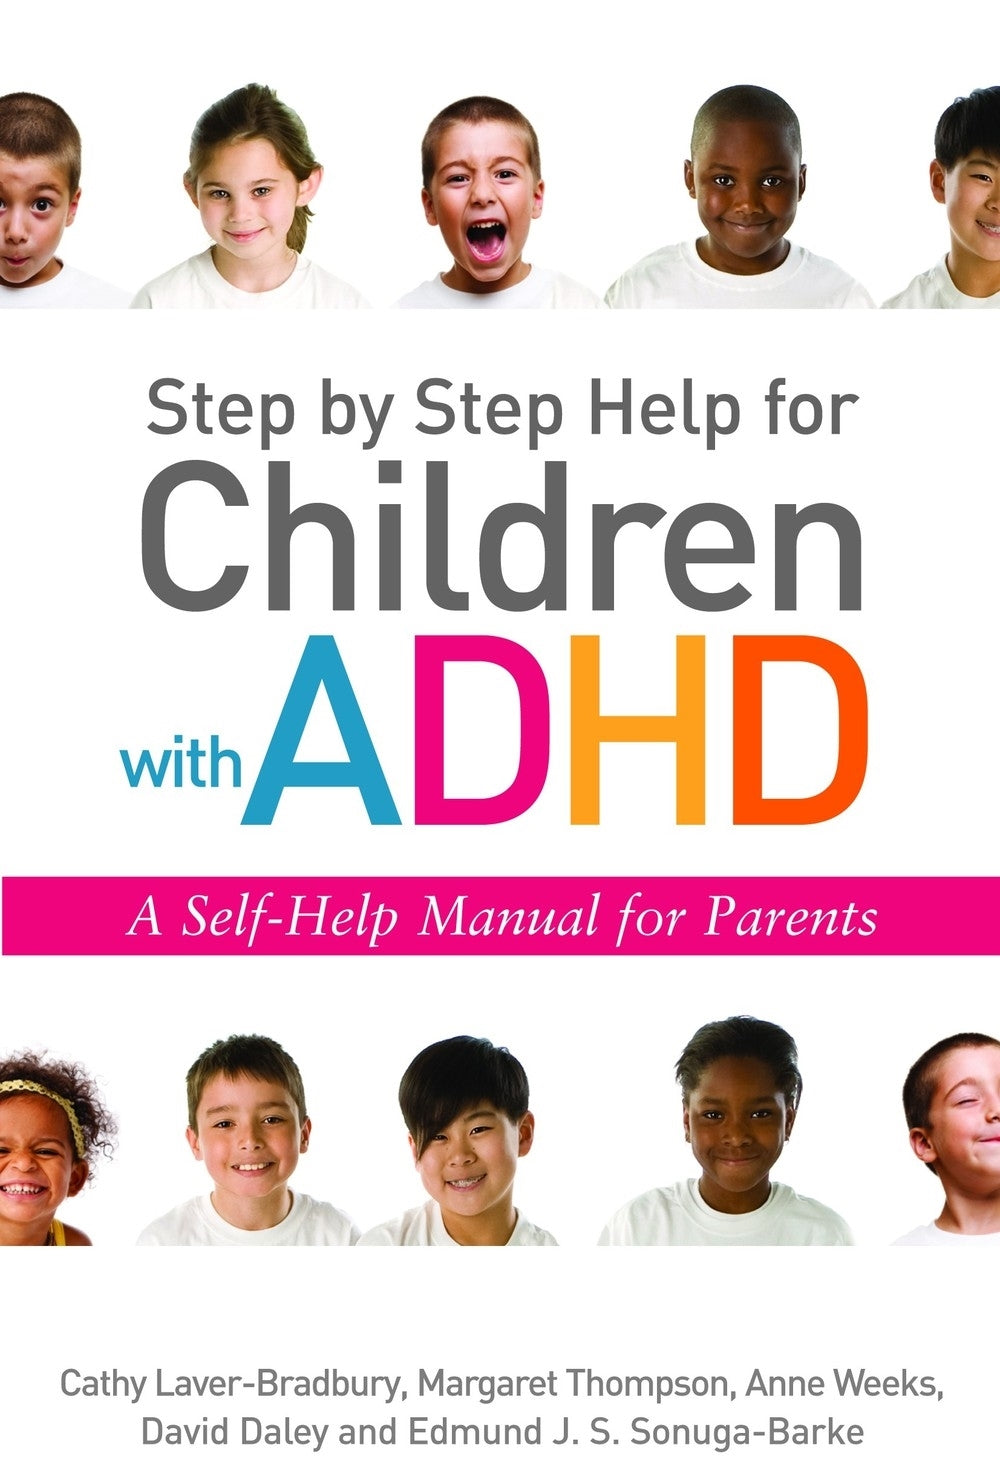 Step by Step Help for Children with ADHD by David Daley, Cathy Laver-Bradbury, Anne Weeks, Edmund J. S Sonuga-Barke, Margaret Thompson